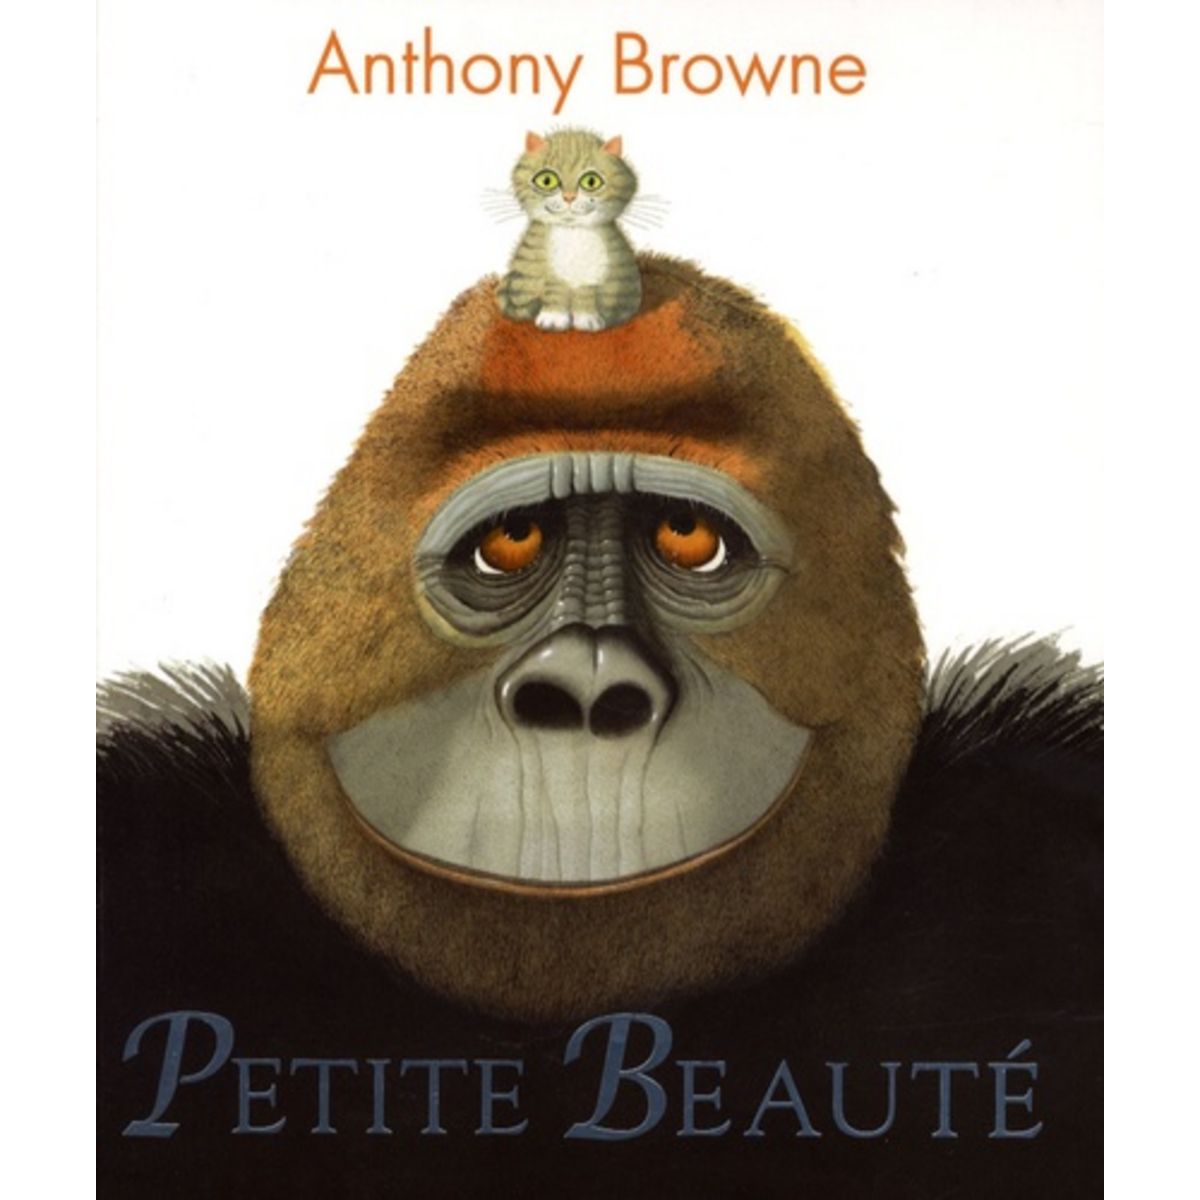  PETITE BEAUTE, Browne Anthony